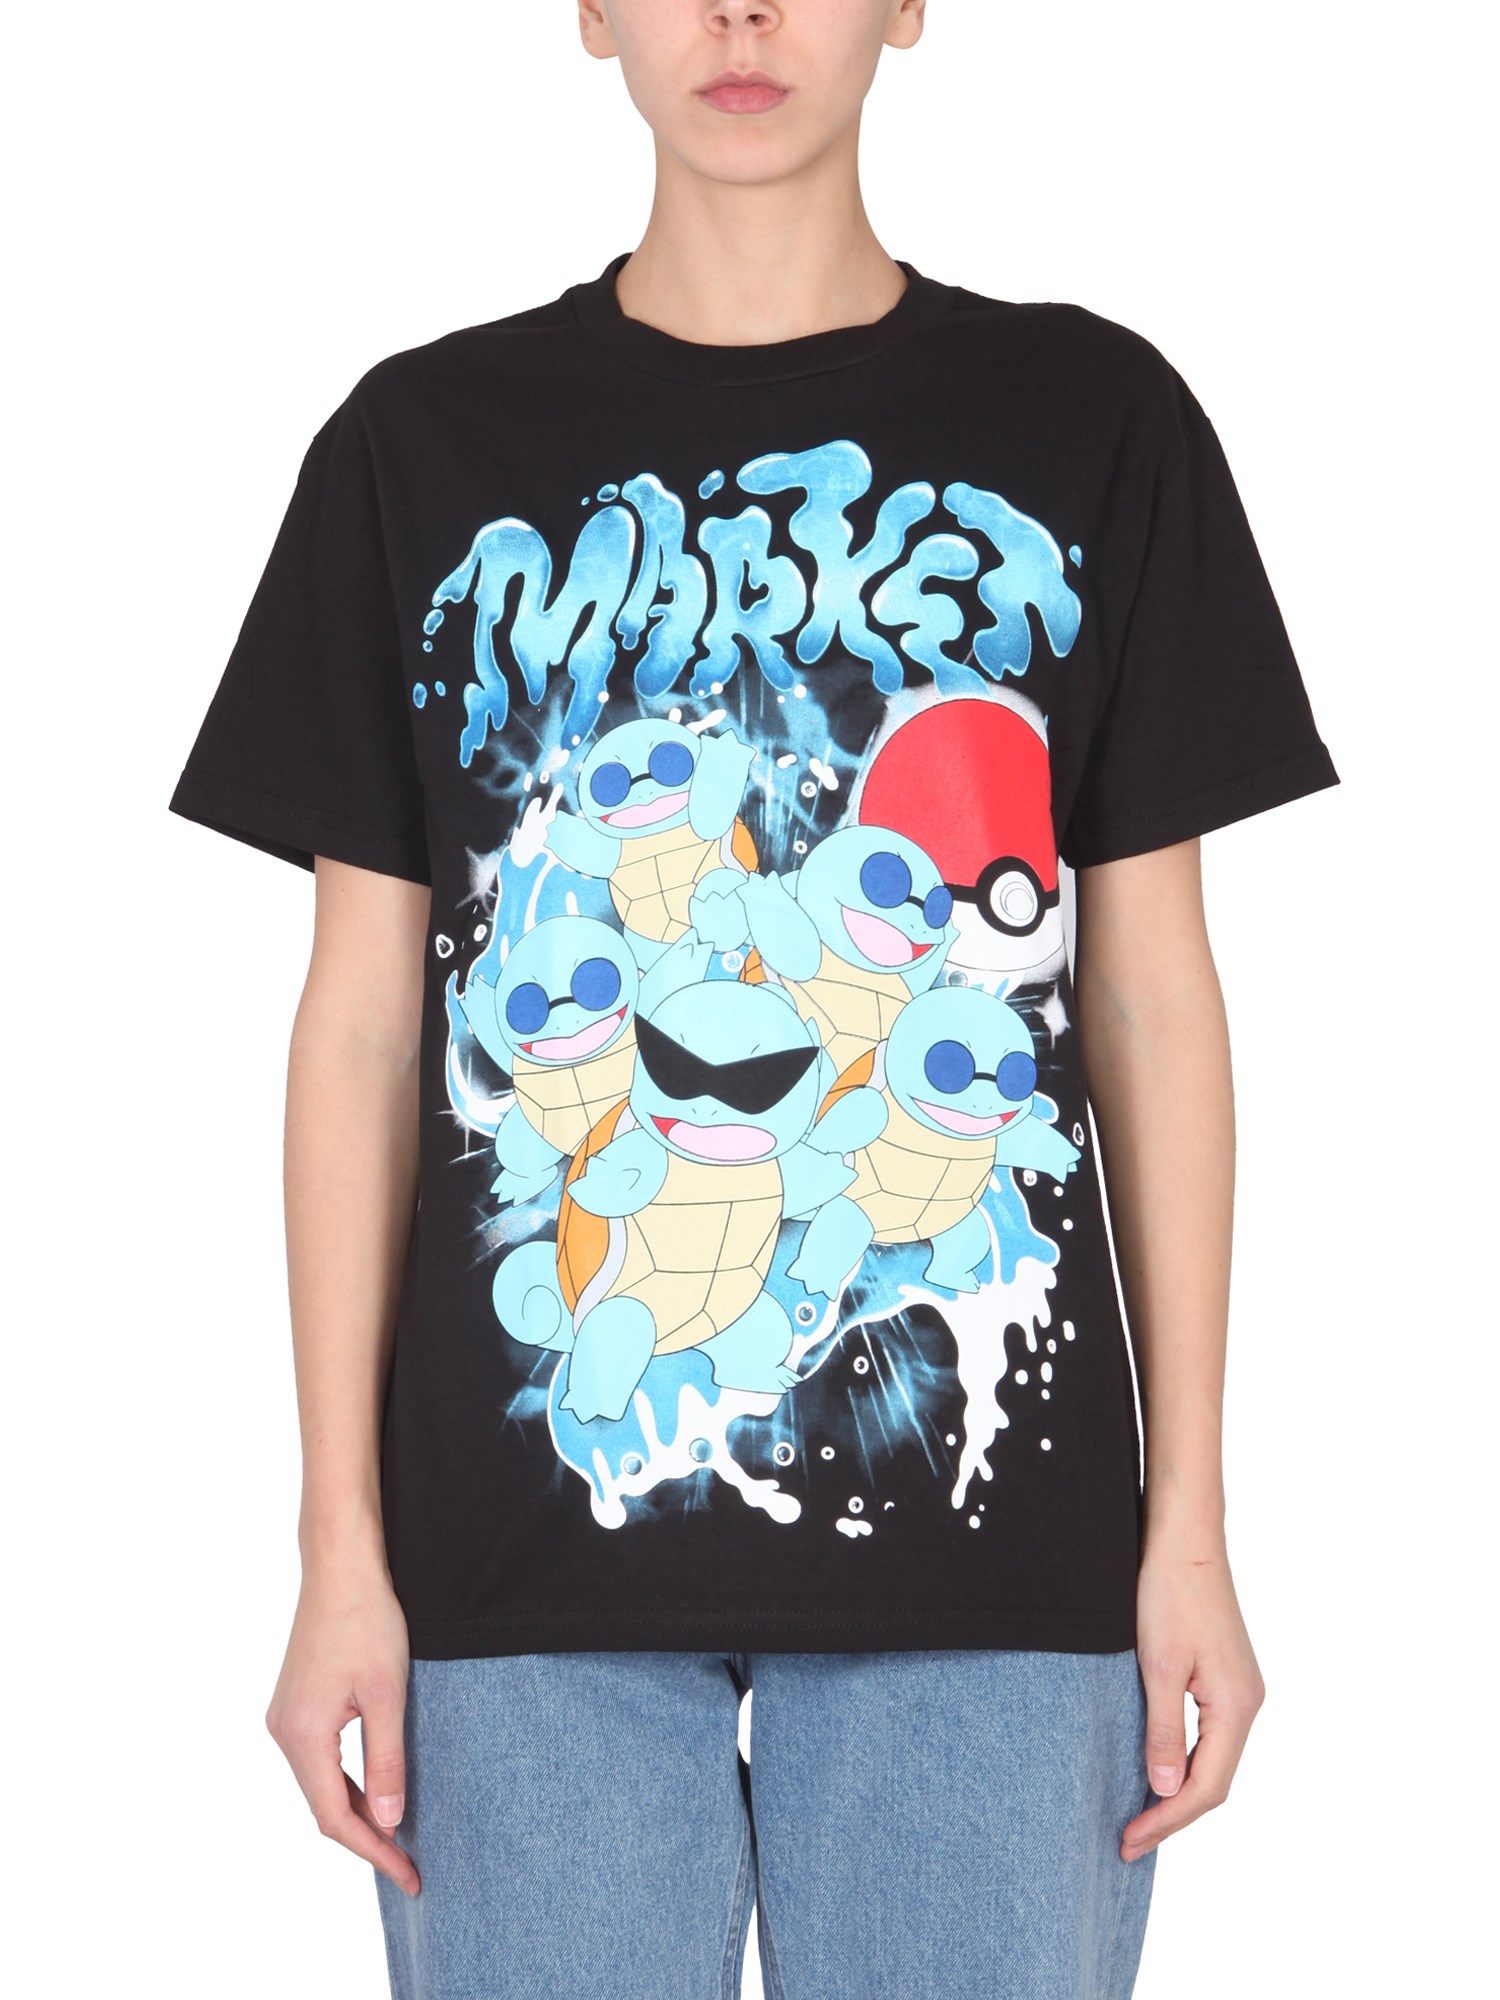 market "pokemon squirtle squad" t-shirt